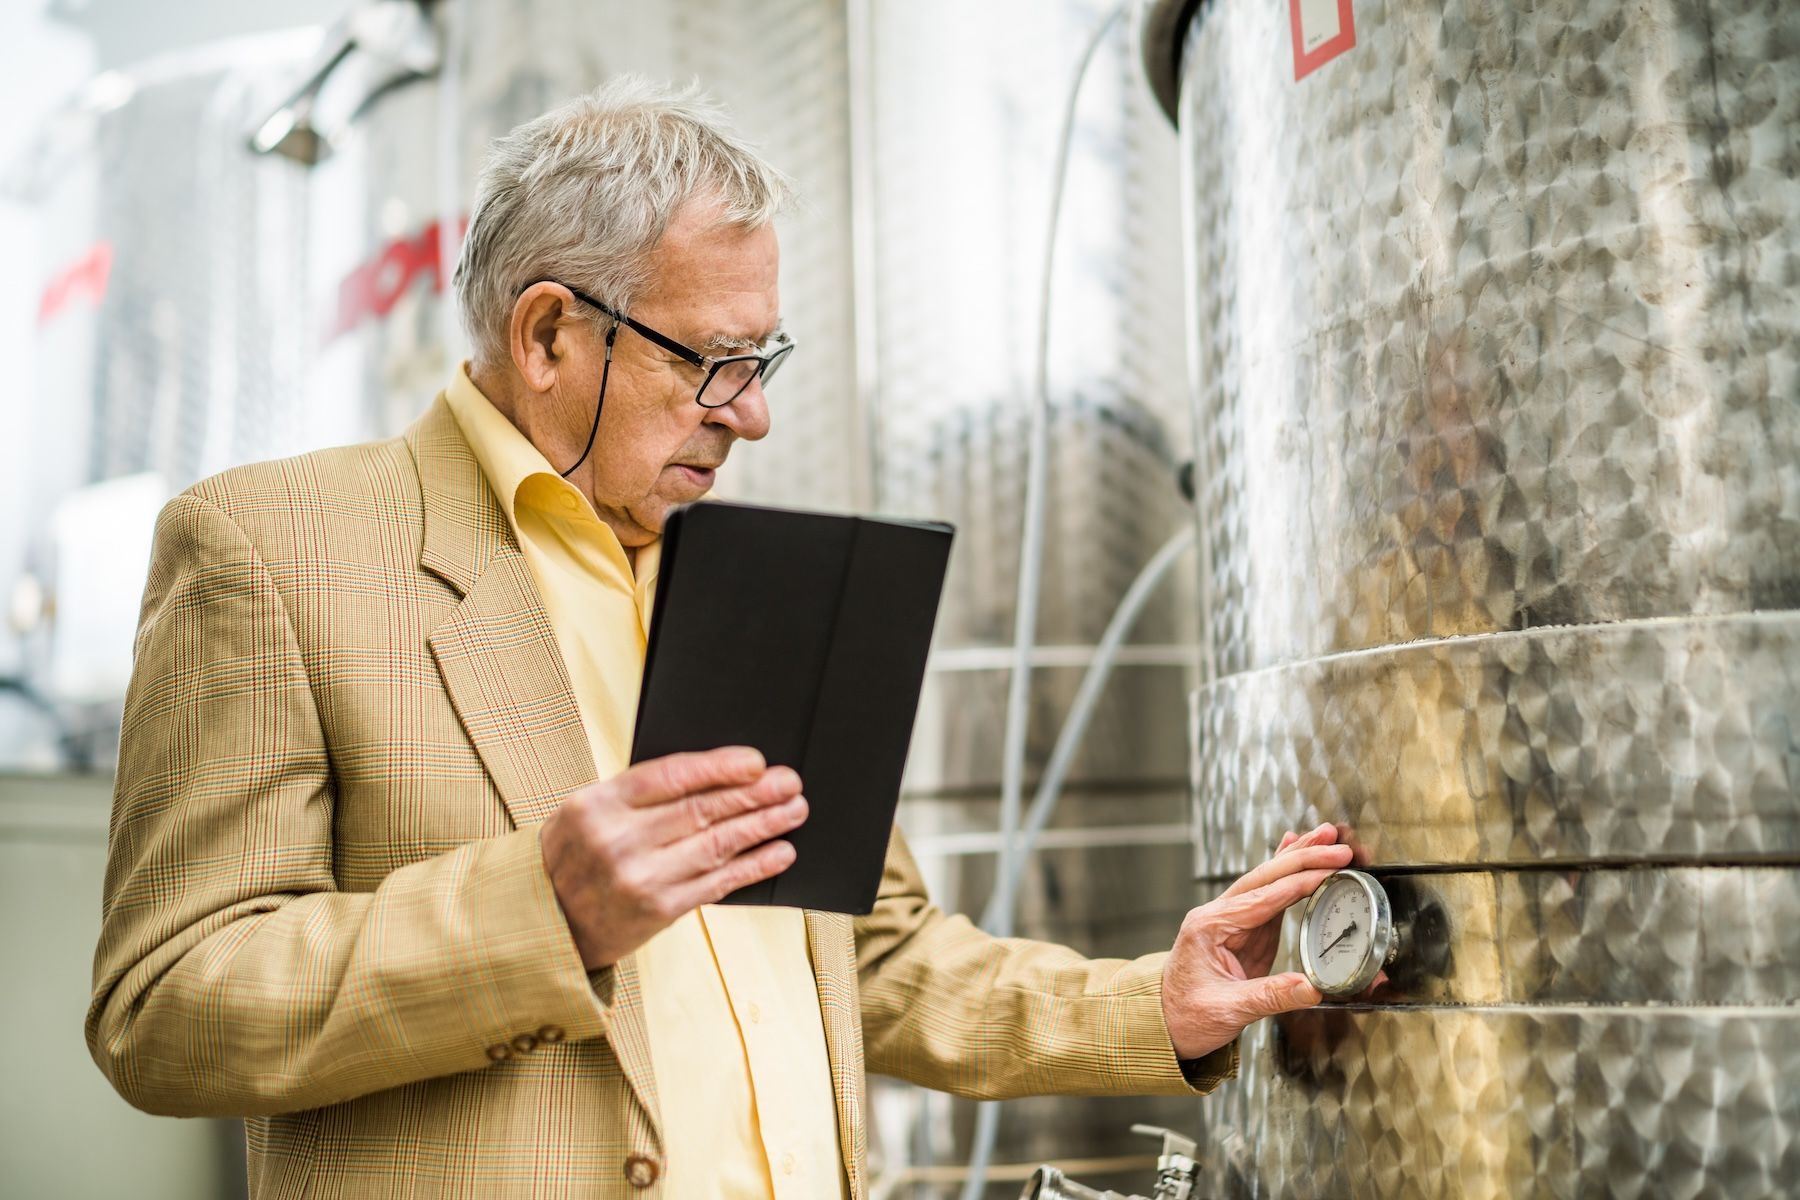 Winemaker entering tank measurements on a tablet 